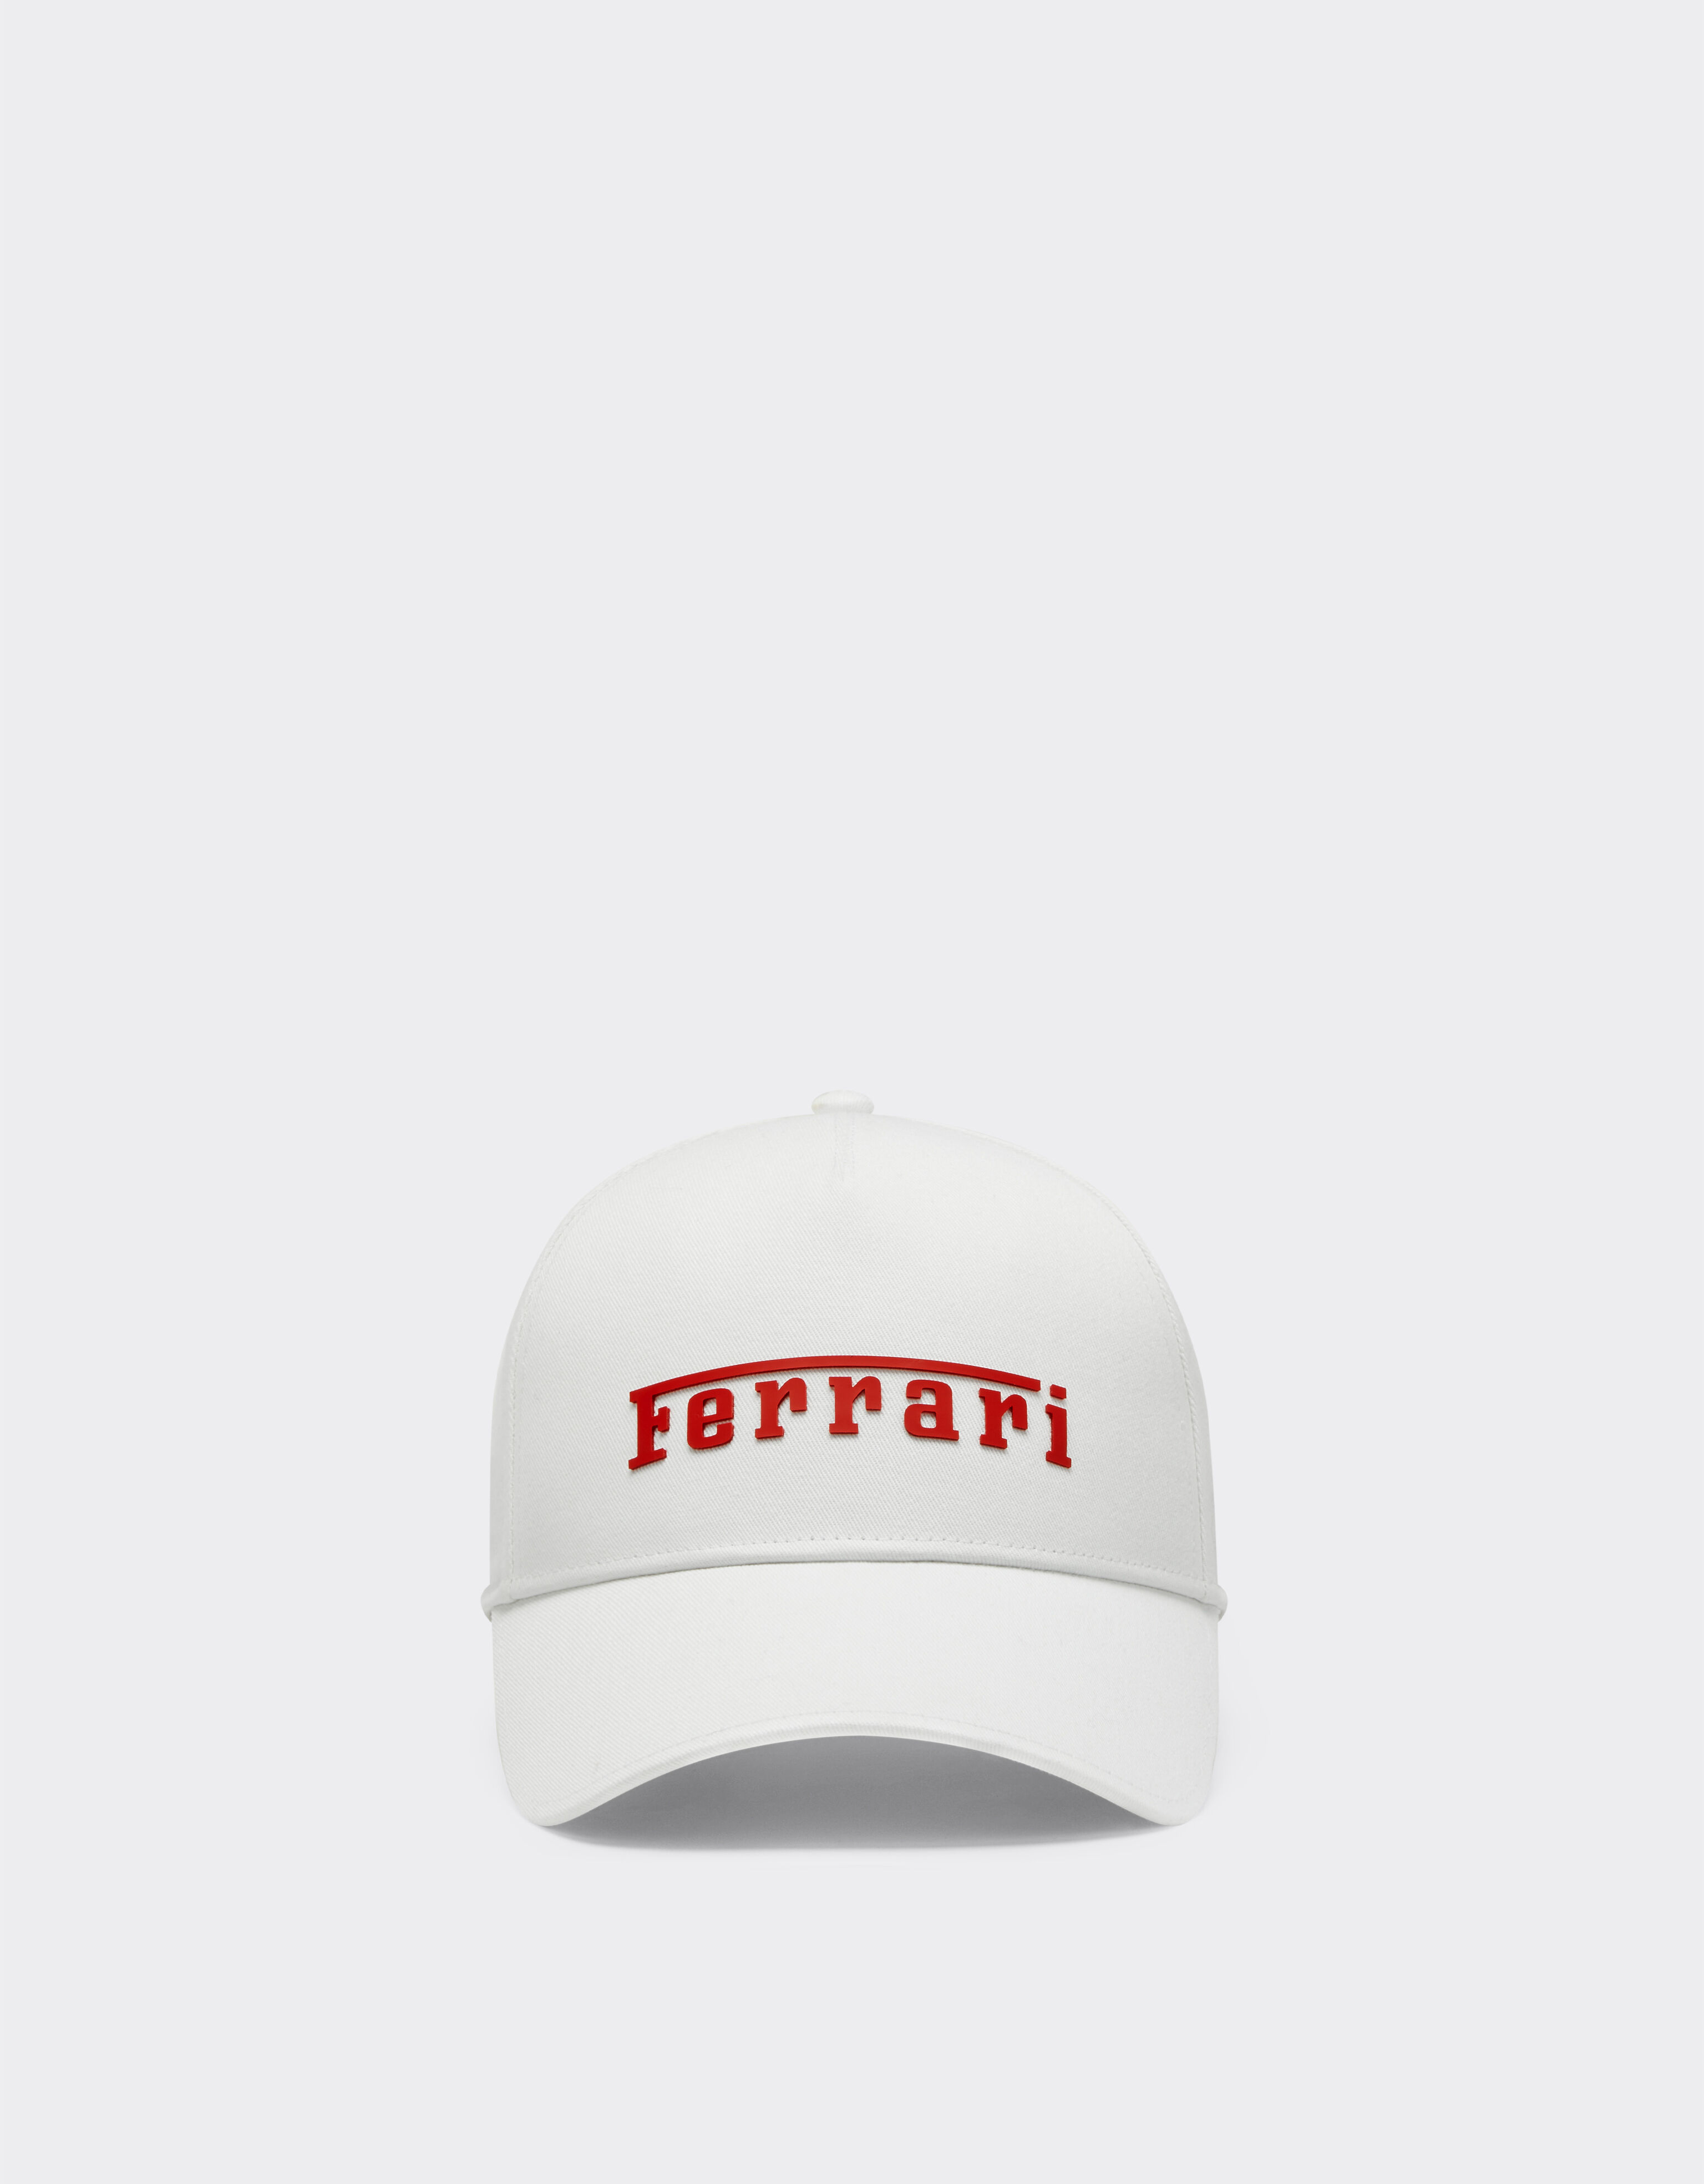 Ferrari Baseball hat with rubberised logo Rosso Corsa F1135f